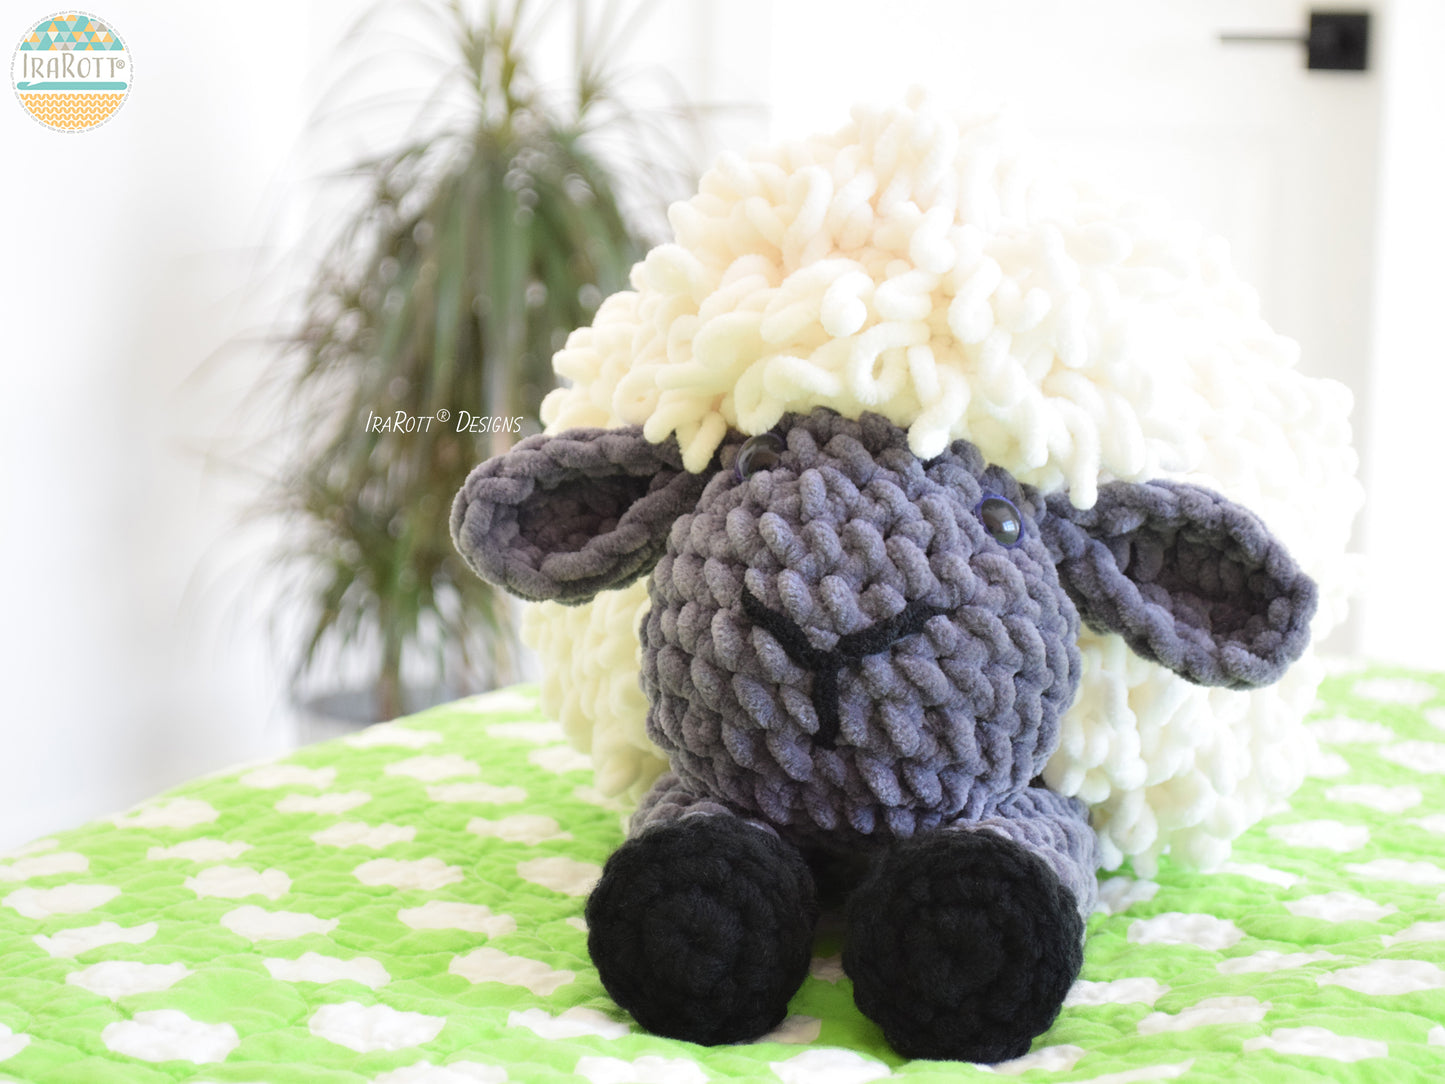 Snooze 'n' Snuggle Woolly Sheep Amigurumi Crochet Pattern